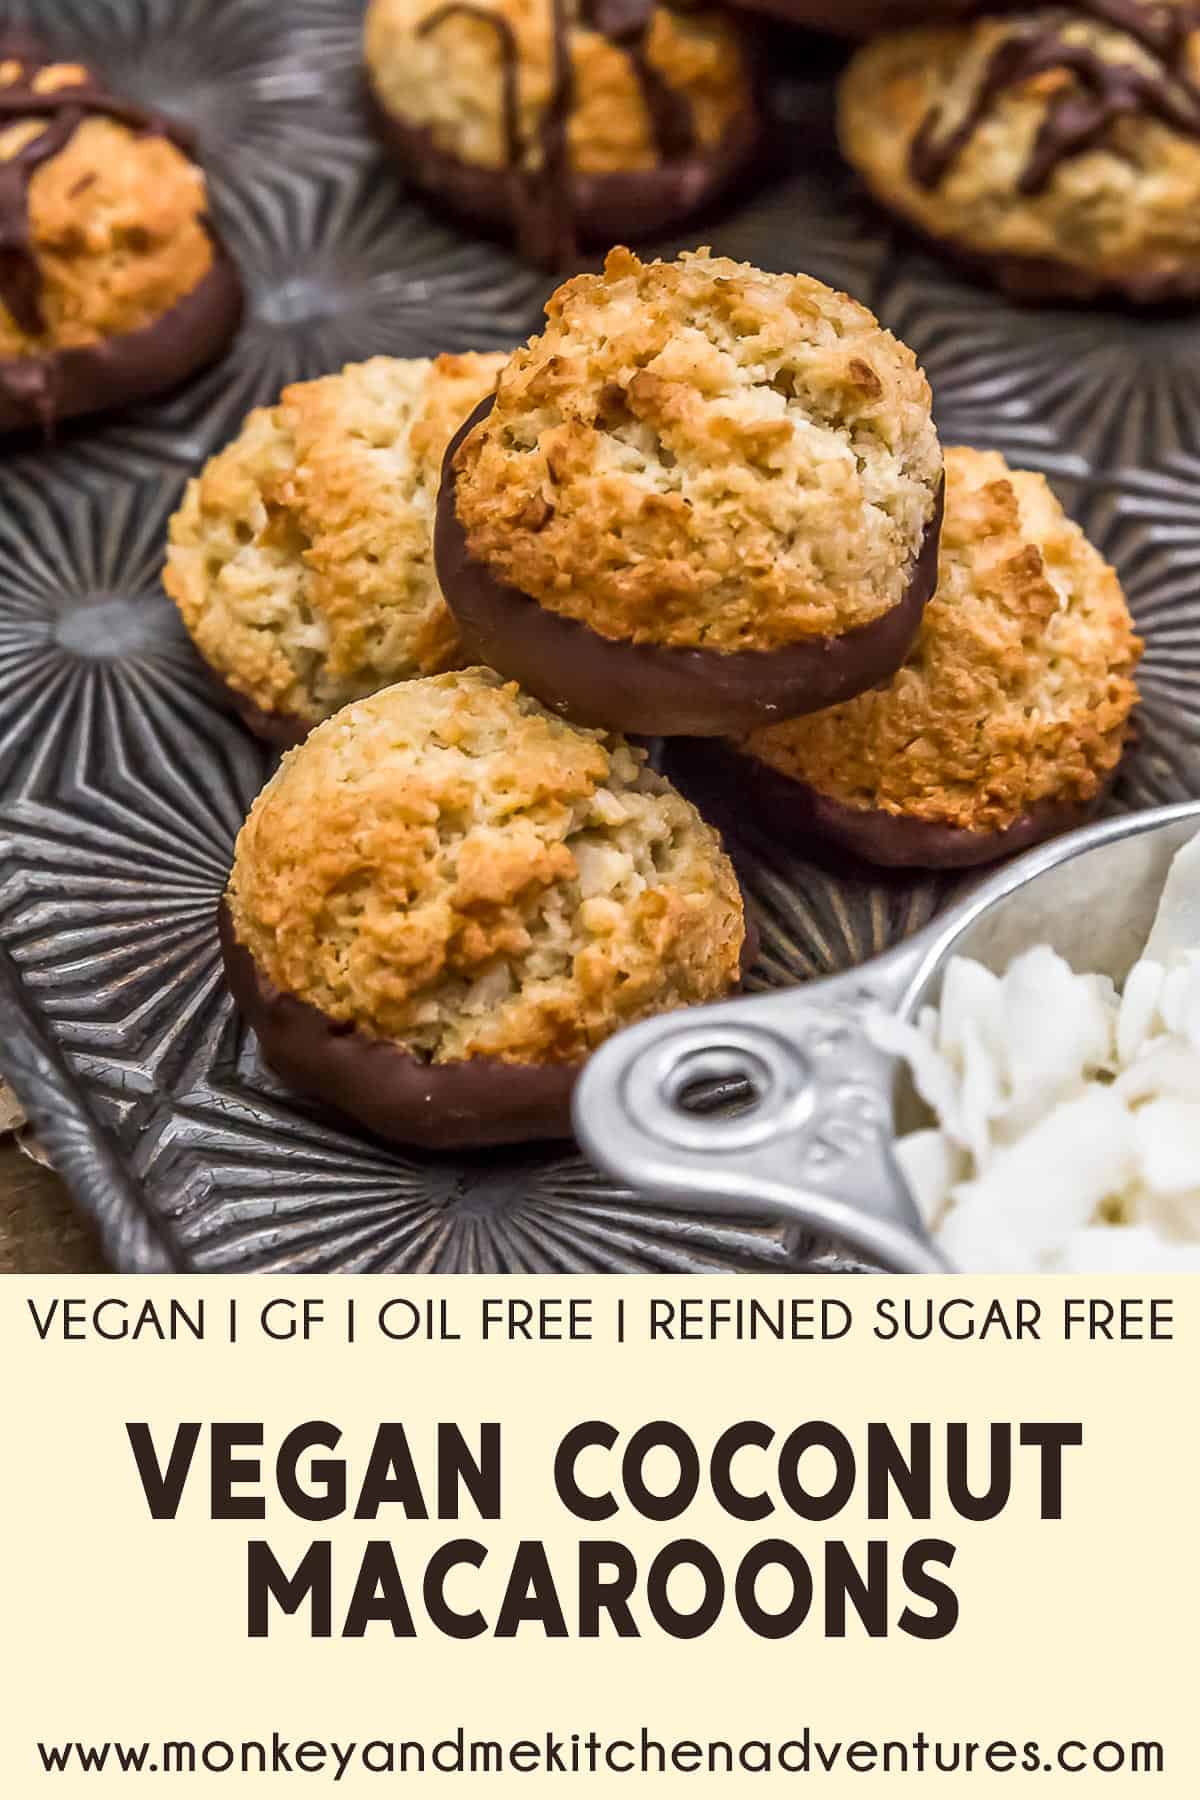 Vegan Coconut Macaroons with Text Description